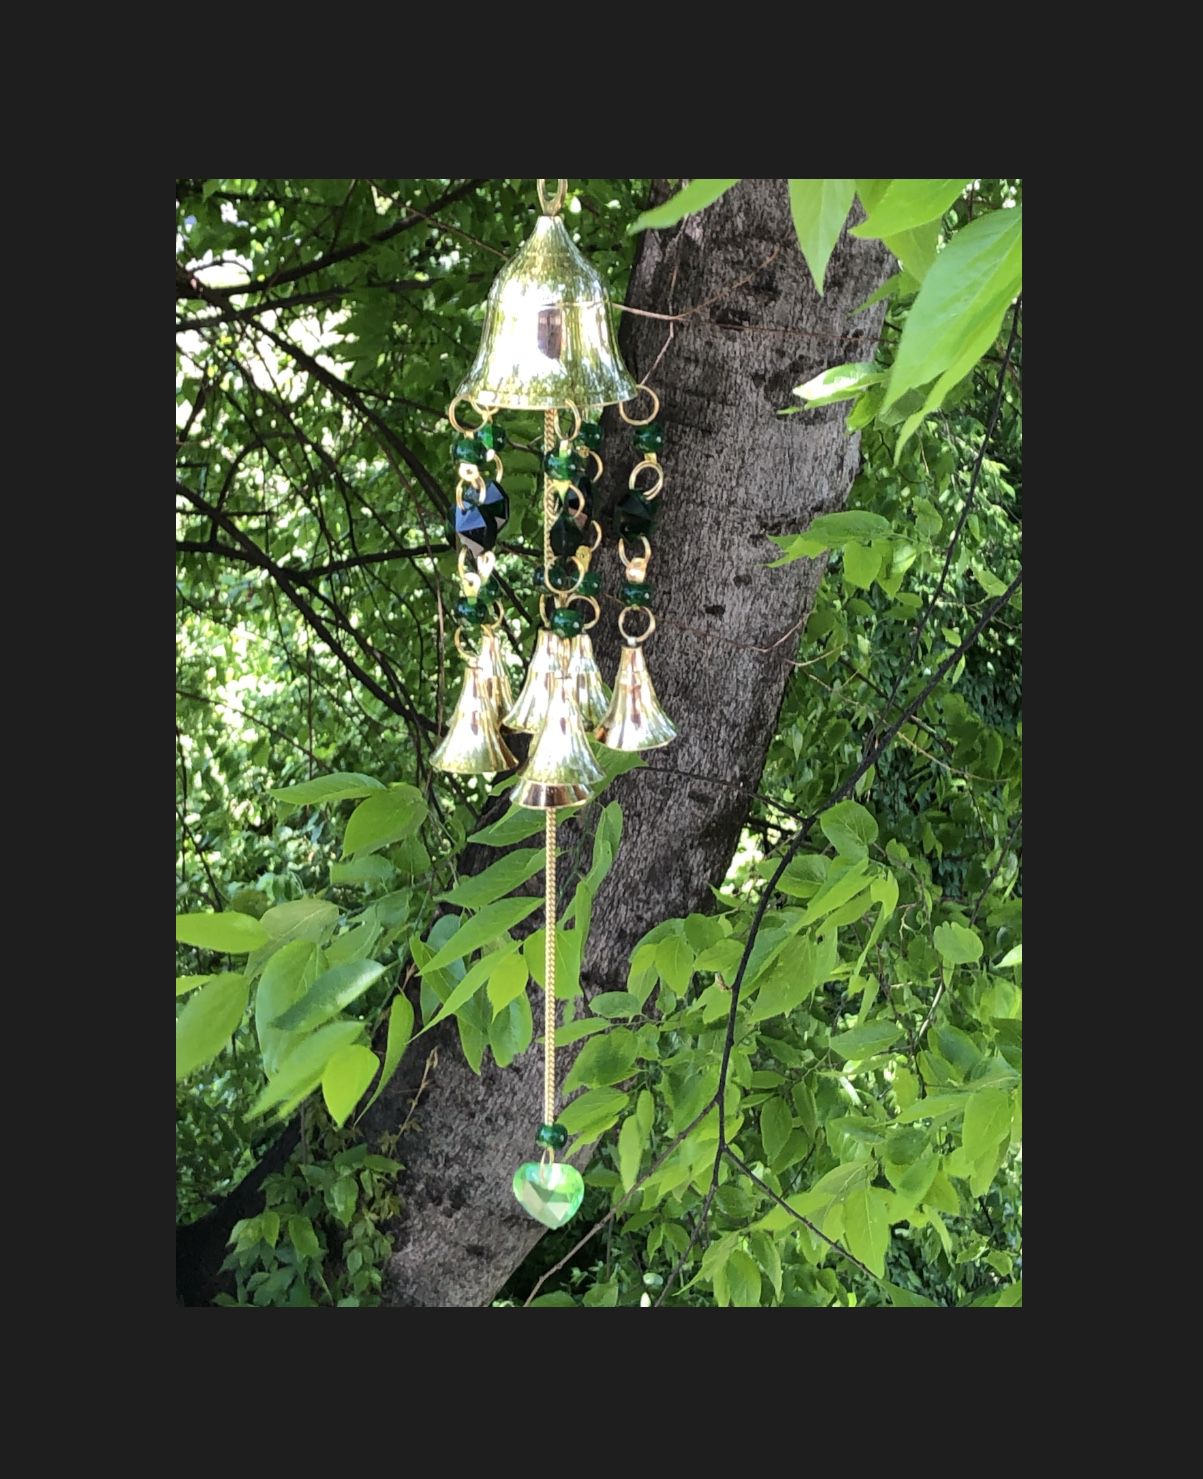 Chakra Colored Translucent Deep Green Beads & Brass Bells Wind Chime Sun Catcher Mobile